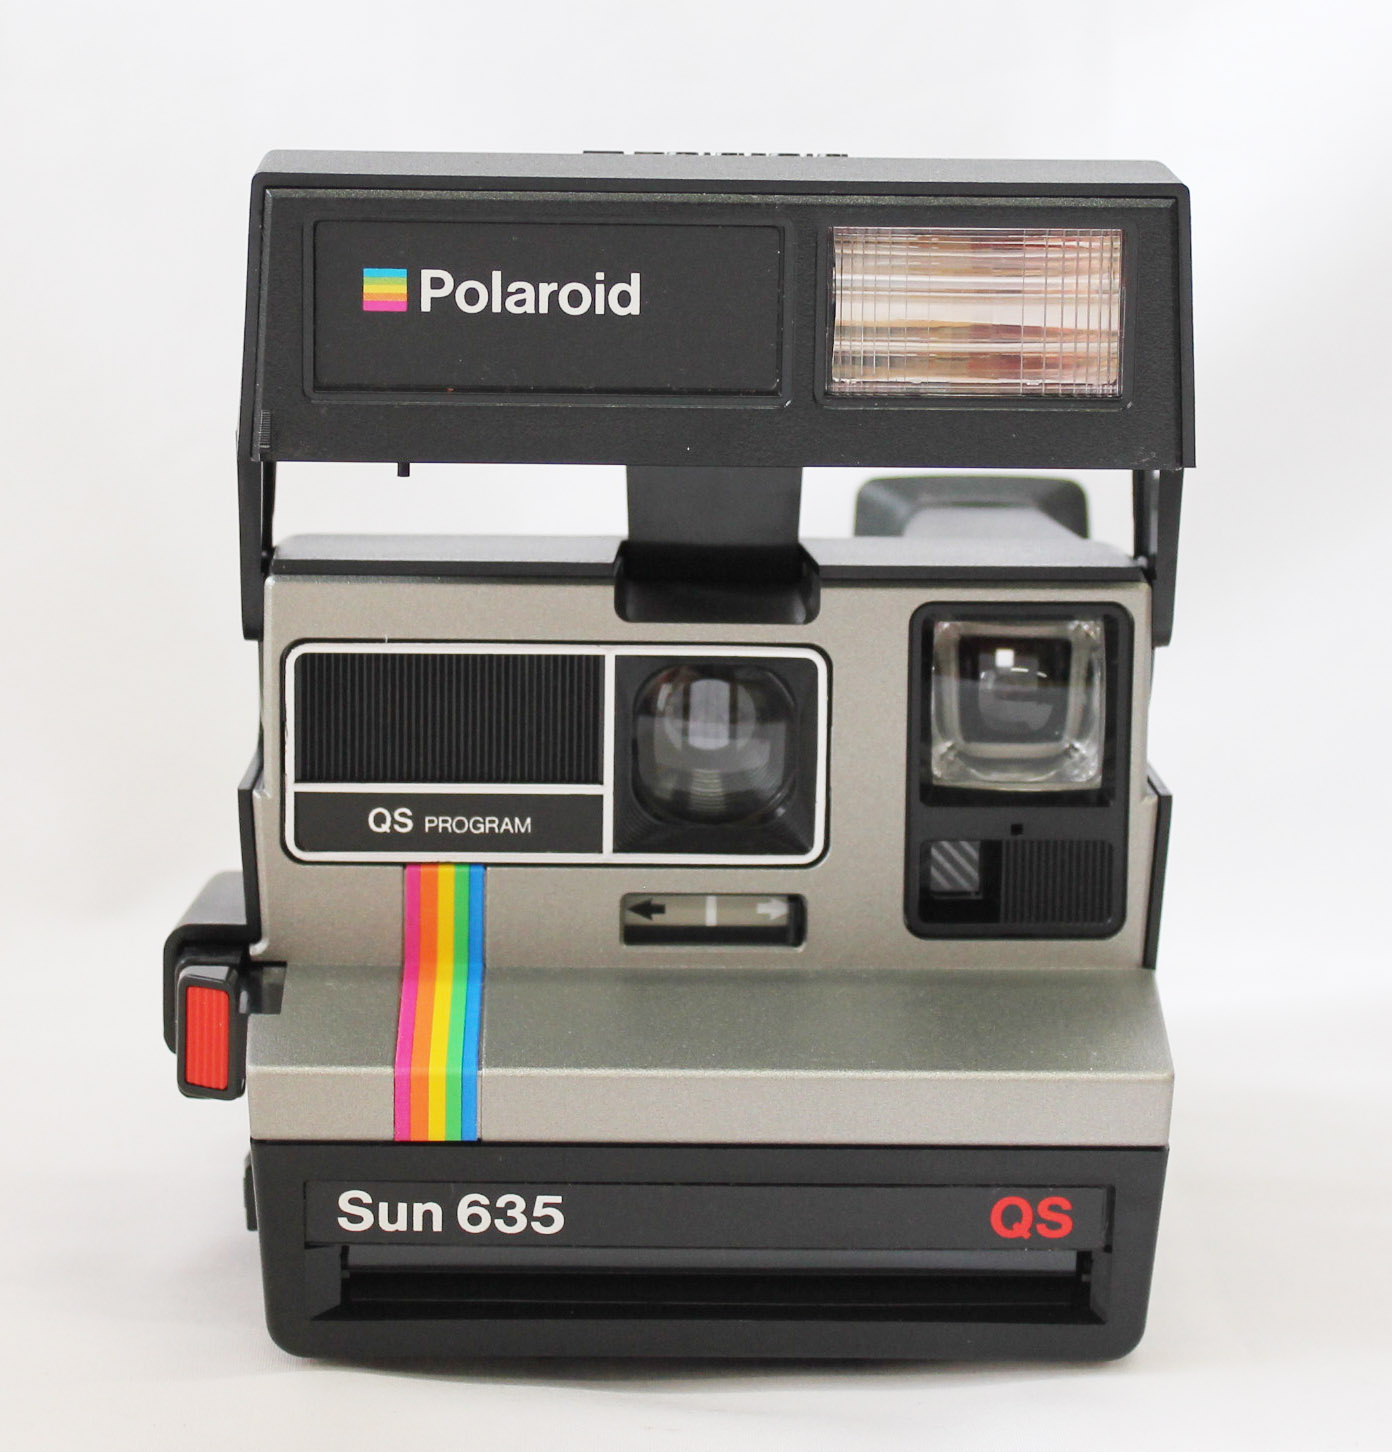 Polaroid Sun 635 QS